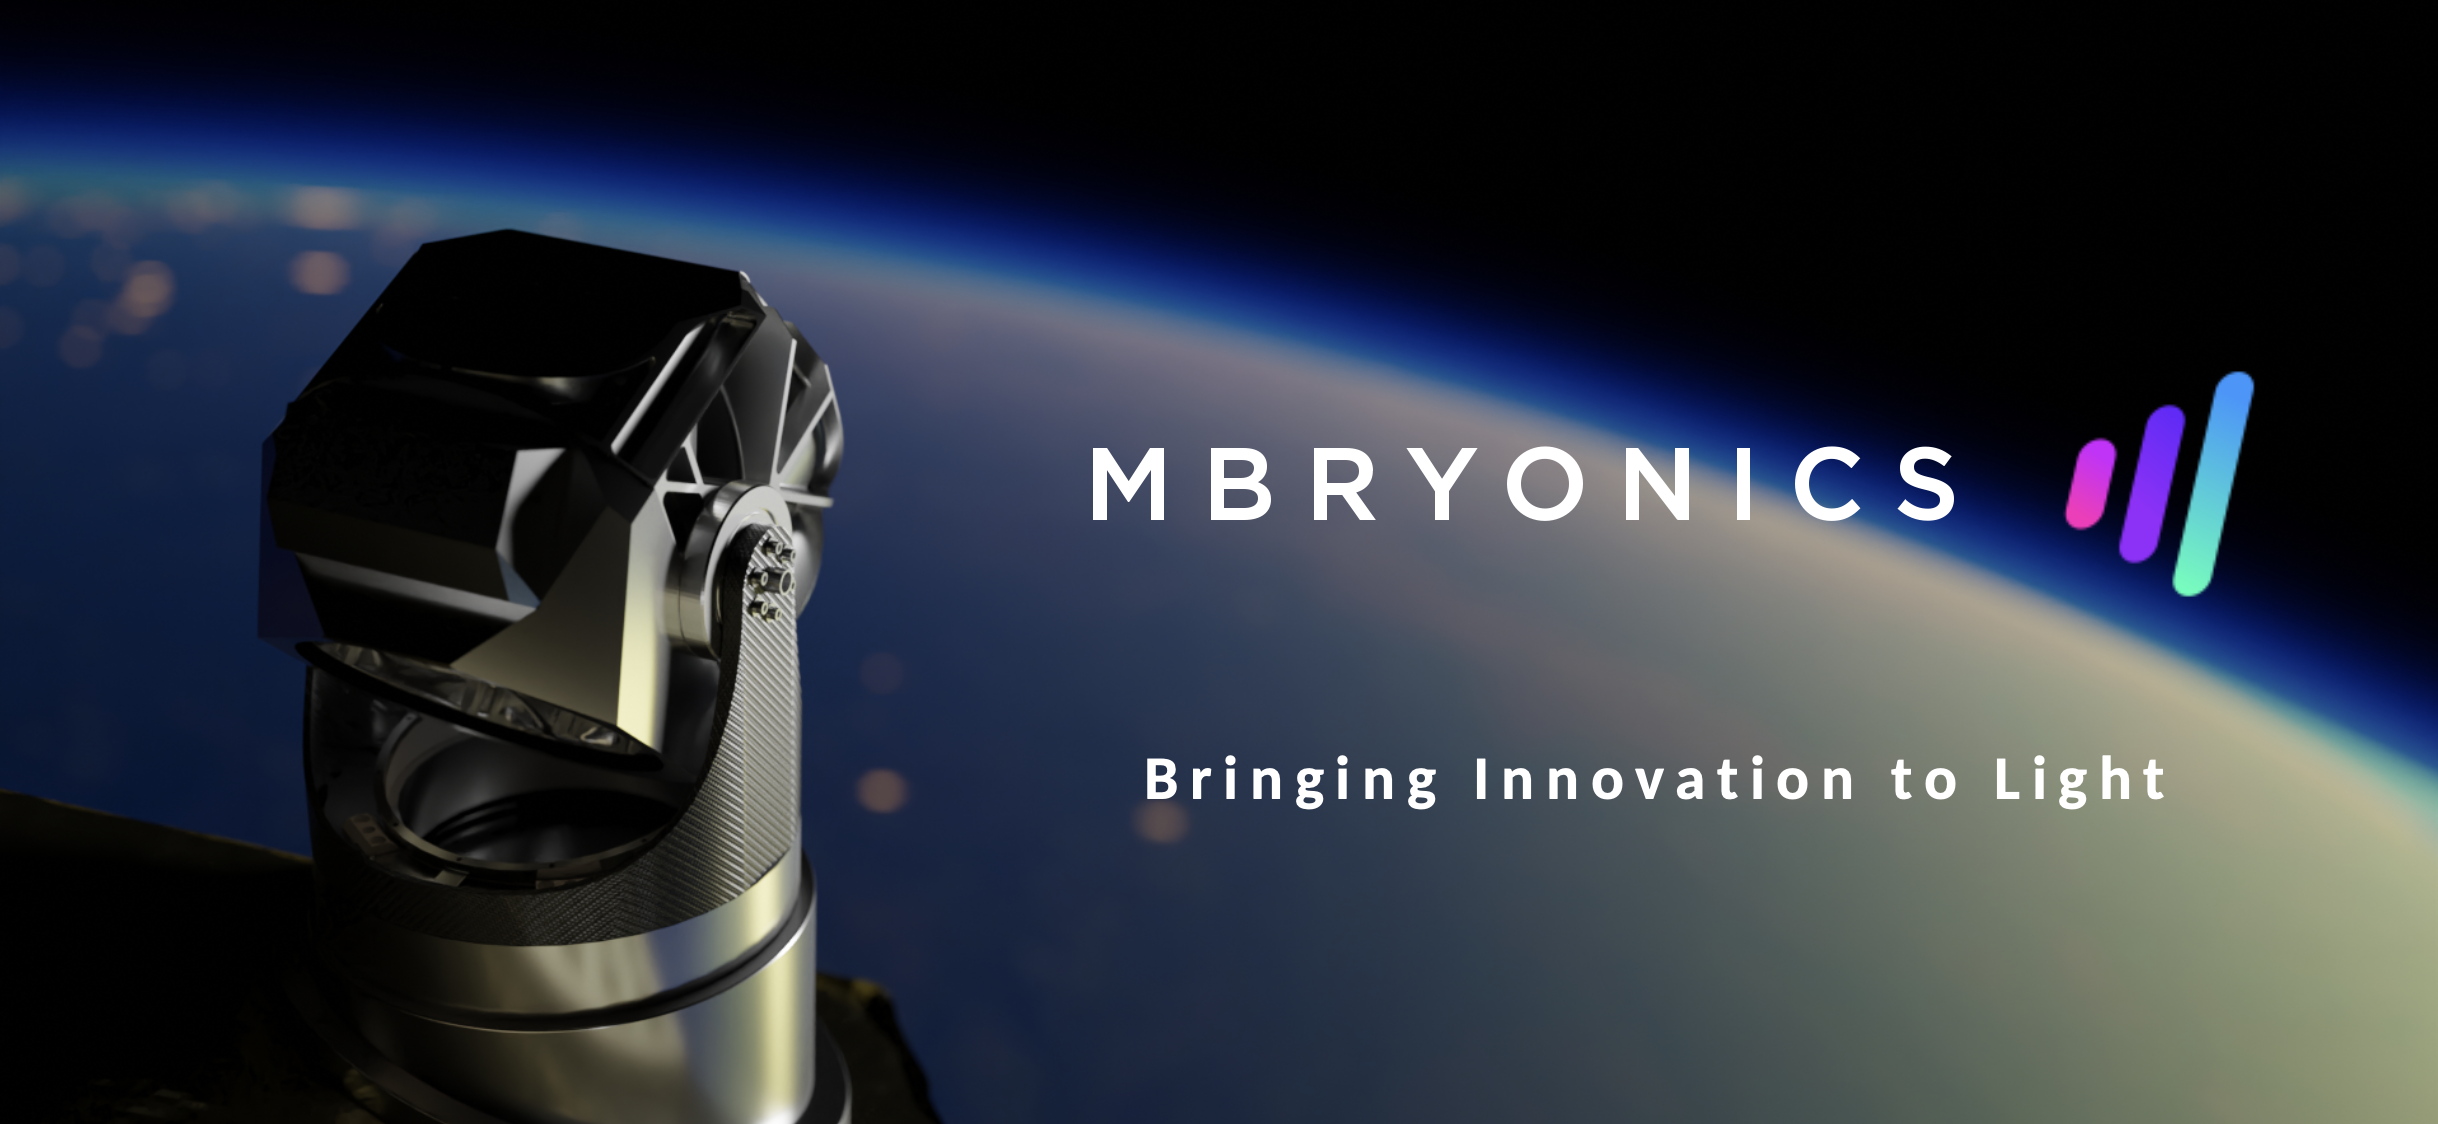 Mbryonics Bringing Innovation to Light